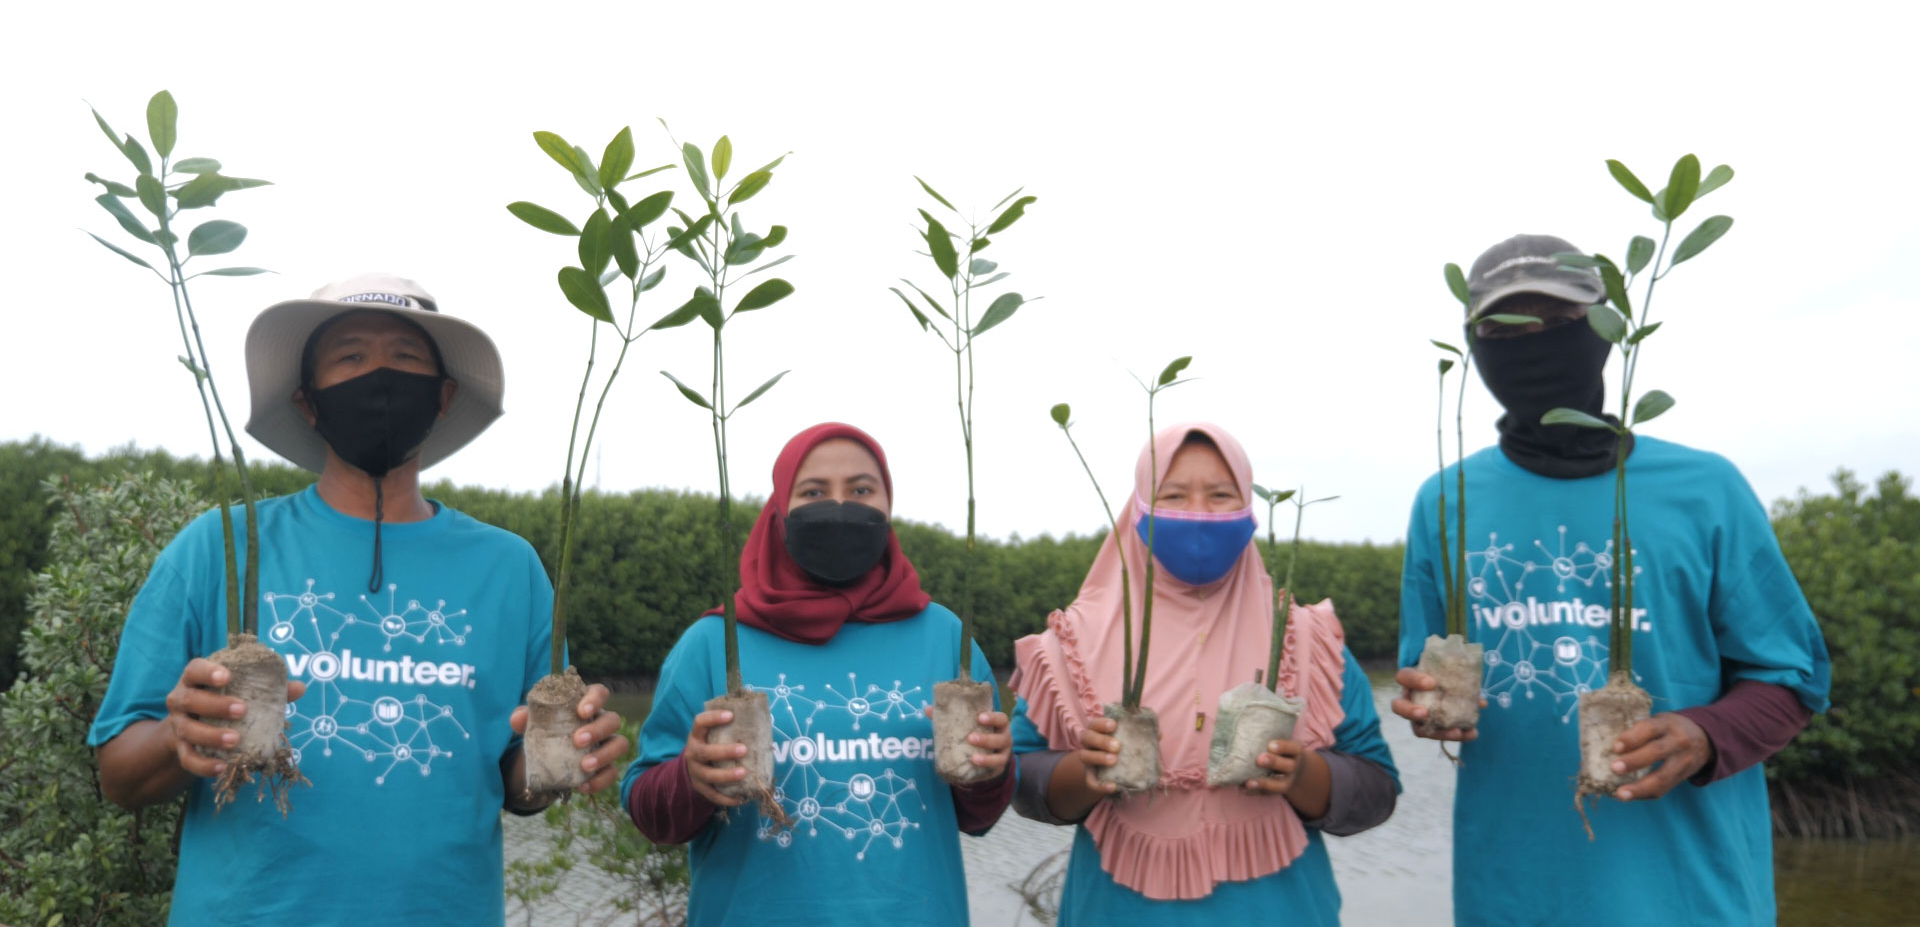 Sebagai bentuk kepedulian terhadap lingkungan, Allianz Indonesia melalui Yayasan Allianz Peduli (YAP) kembali berpartisipasi dalam inisiatif World Cleanup Day 2021 (WCD) dengan melakukan serangkaian kegiatan mulai dari penanaman 2.000 pohon mangrove di Pulau Harapan, Kepulauan Seribu, pemberdayaan komunitas lokal hingga melibatkan masyarakat untuk berdonasi penanaman mangrove